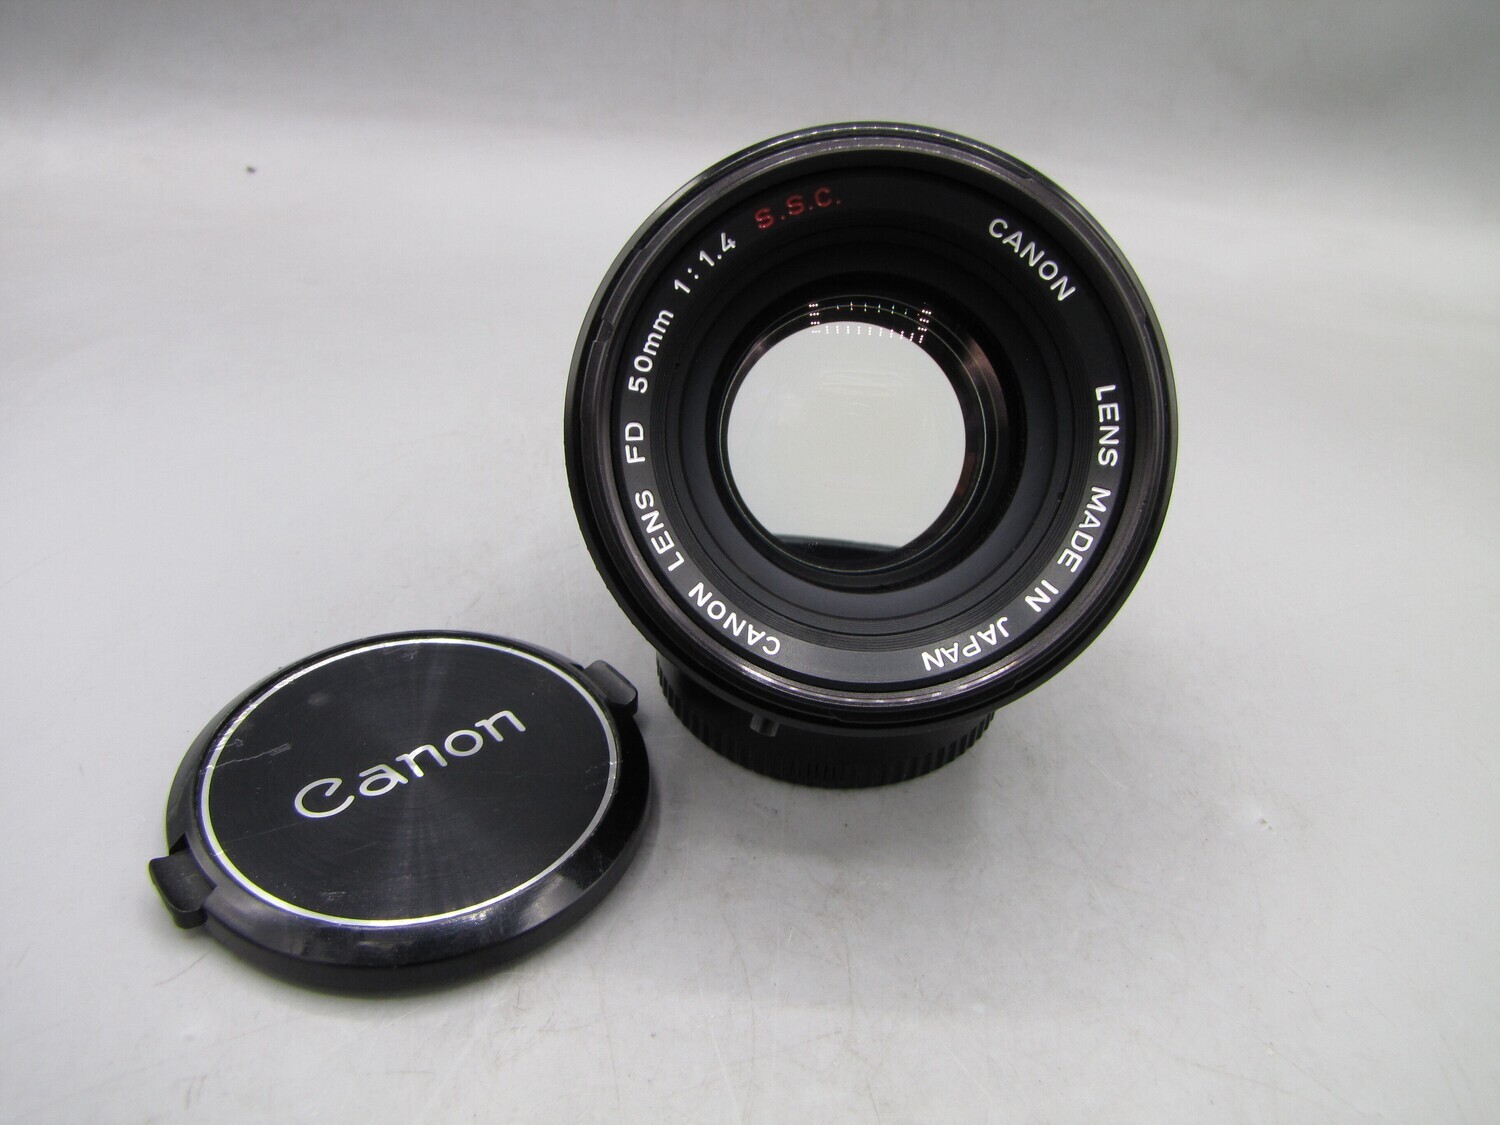 Canon FD 50mm 1:1.4 Lens for SLR cameras Tested